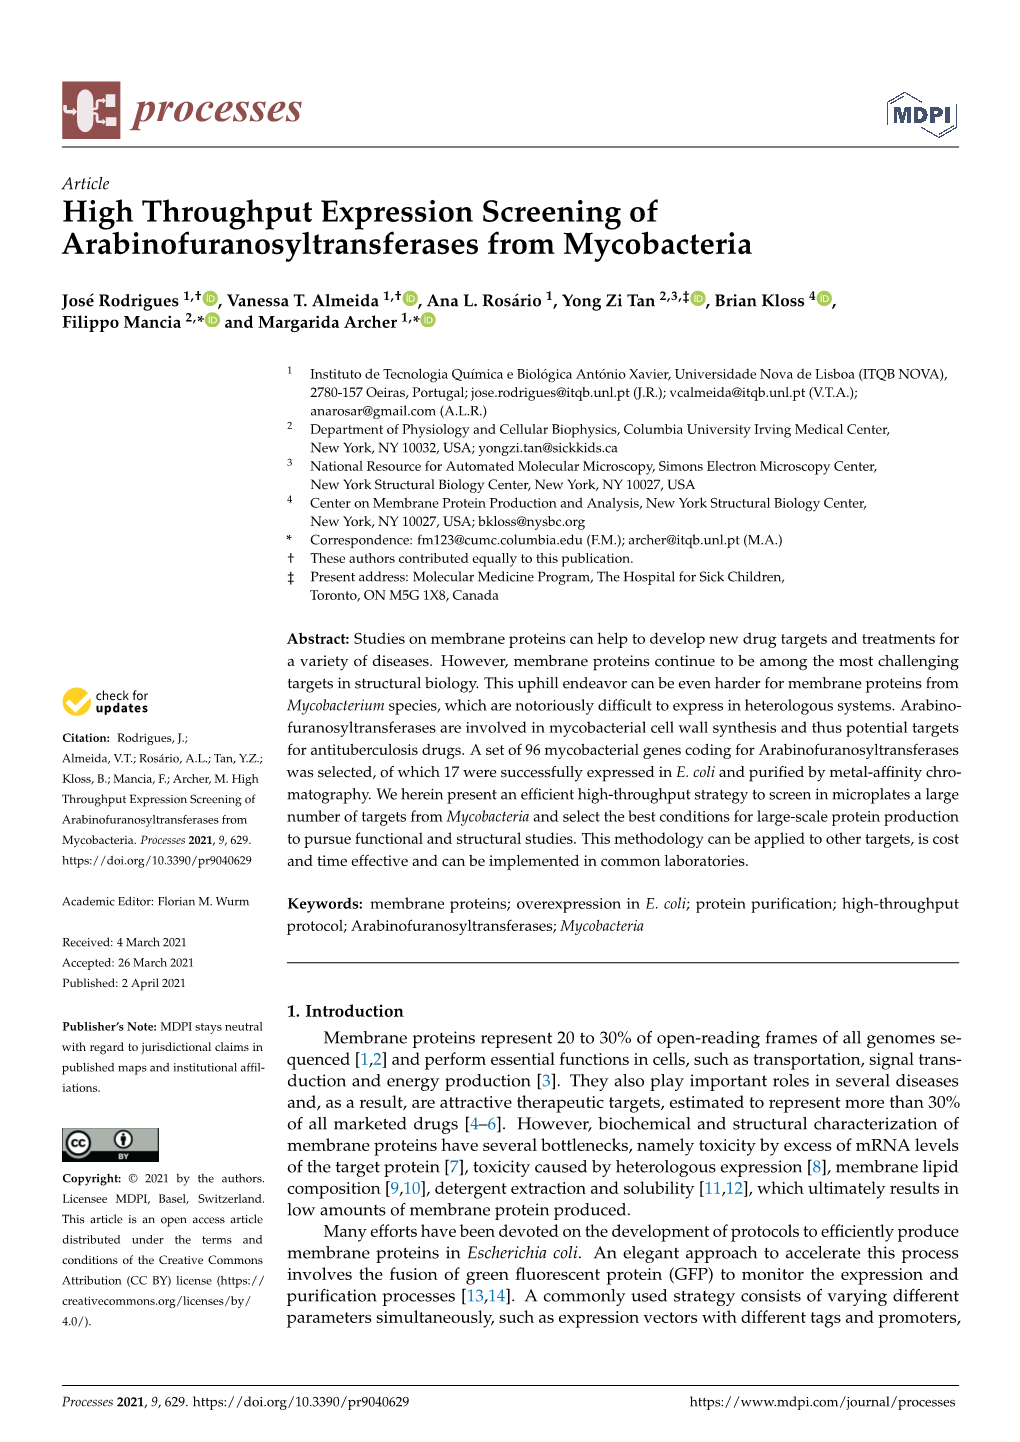 High Throughput Expression Screening of Arabinofuranosyltransferases from Mycobacteria